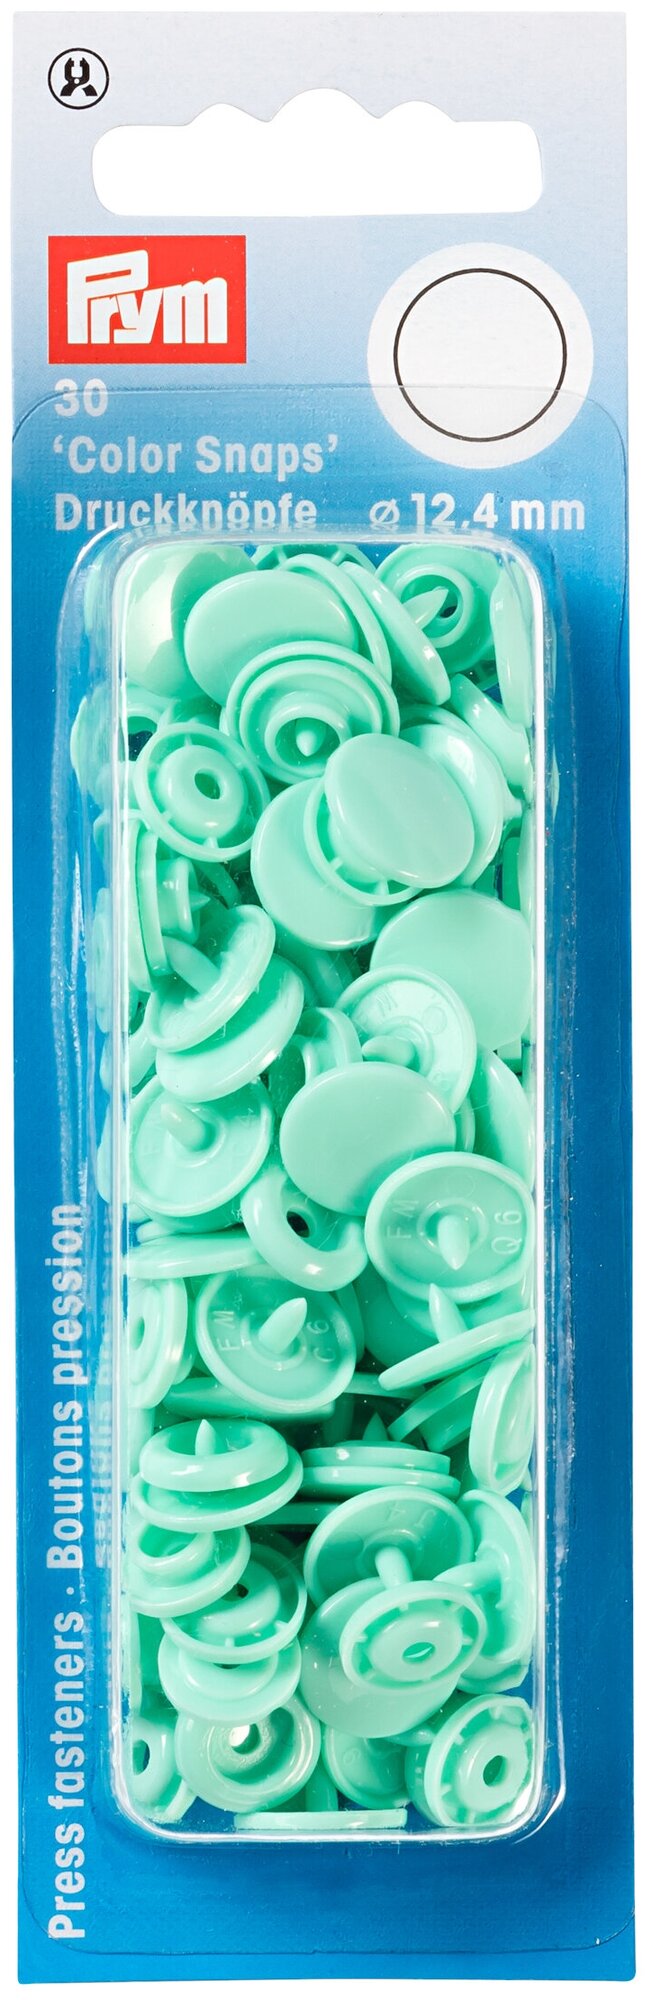 Кнопки Color Snaps, диаметр 12,4мм, Prym, 393119